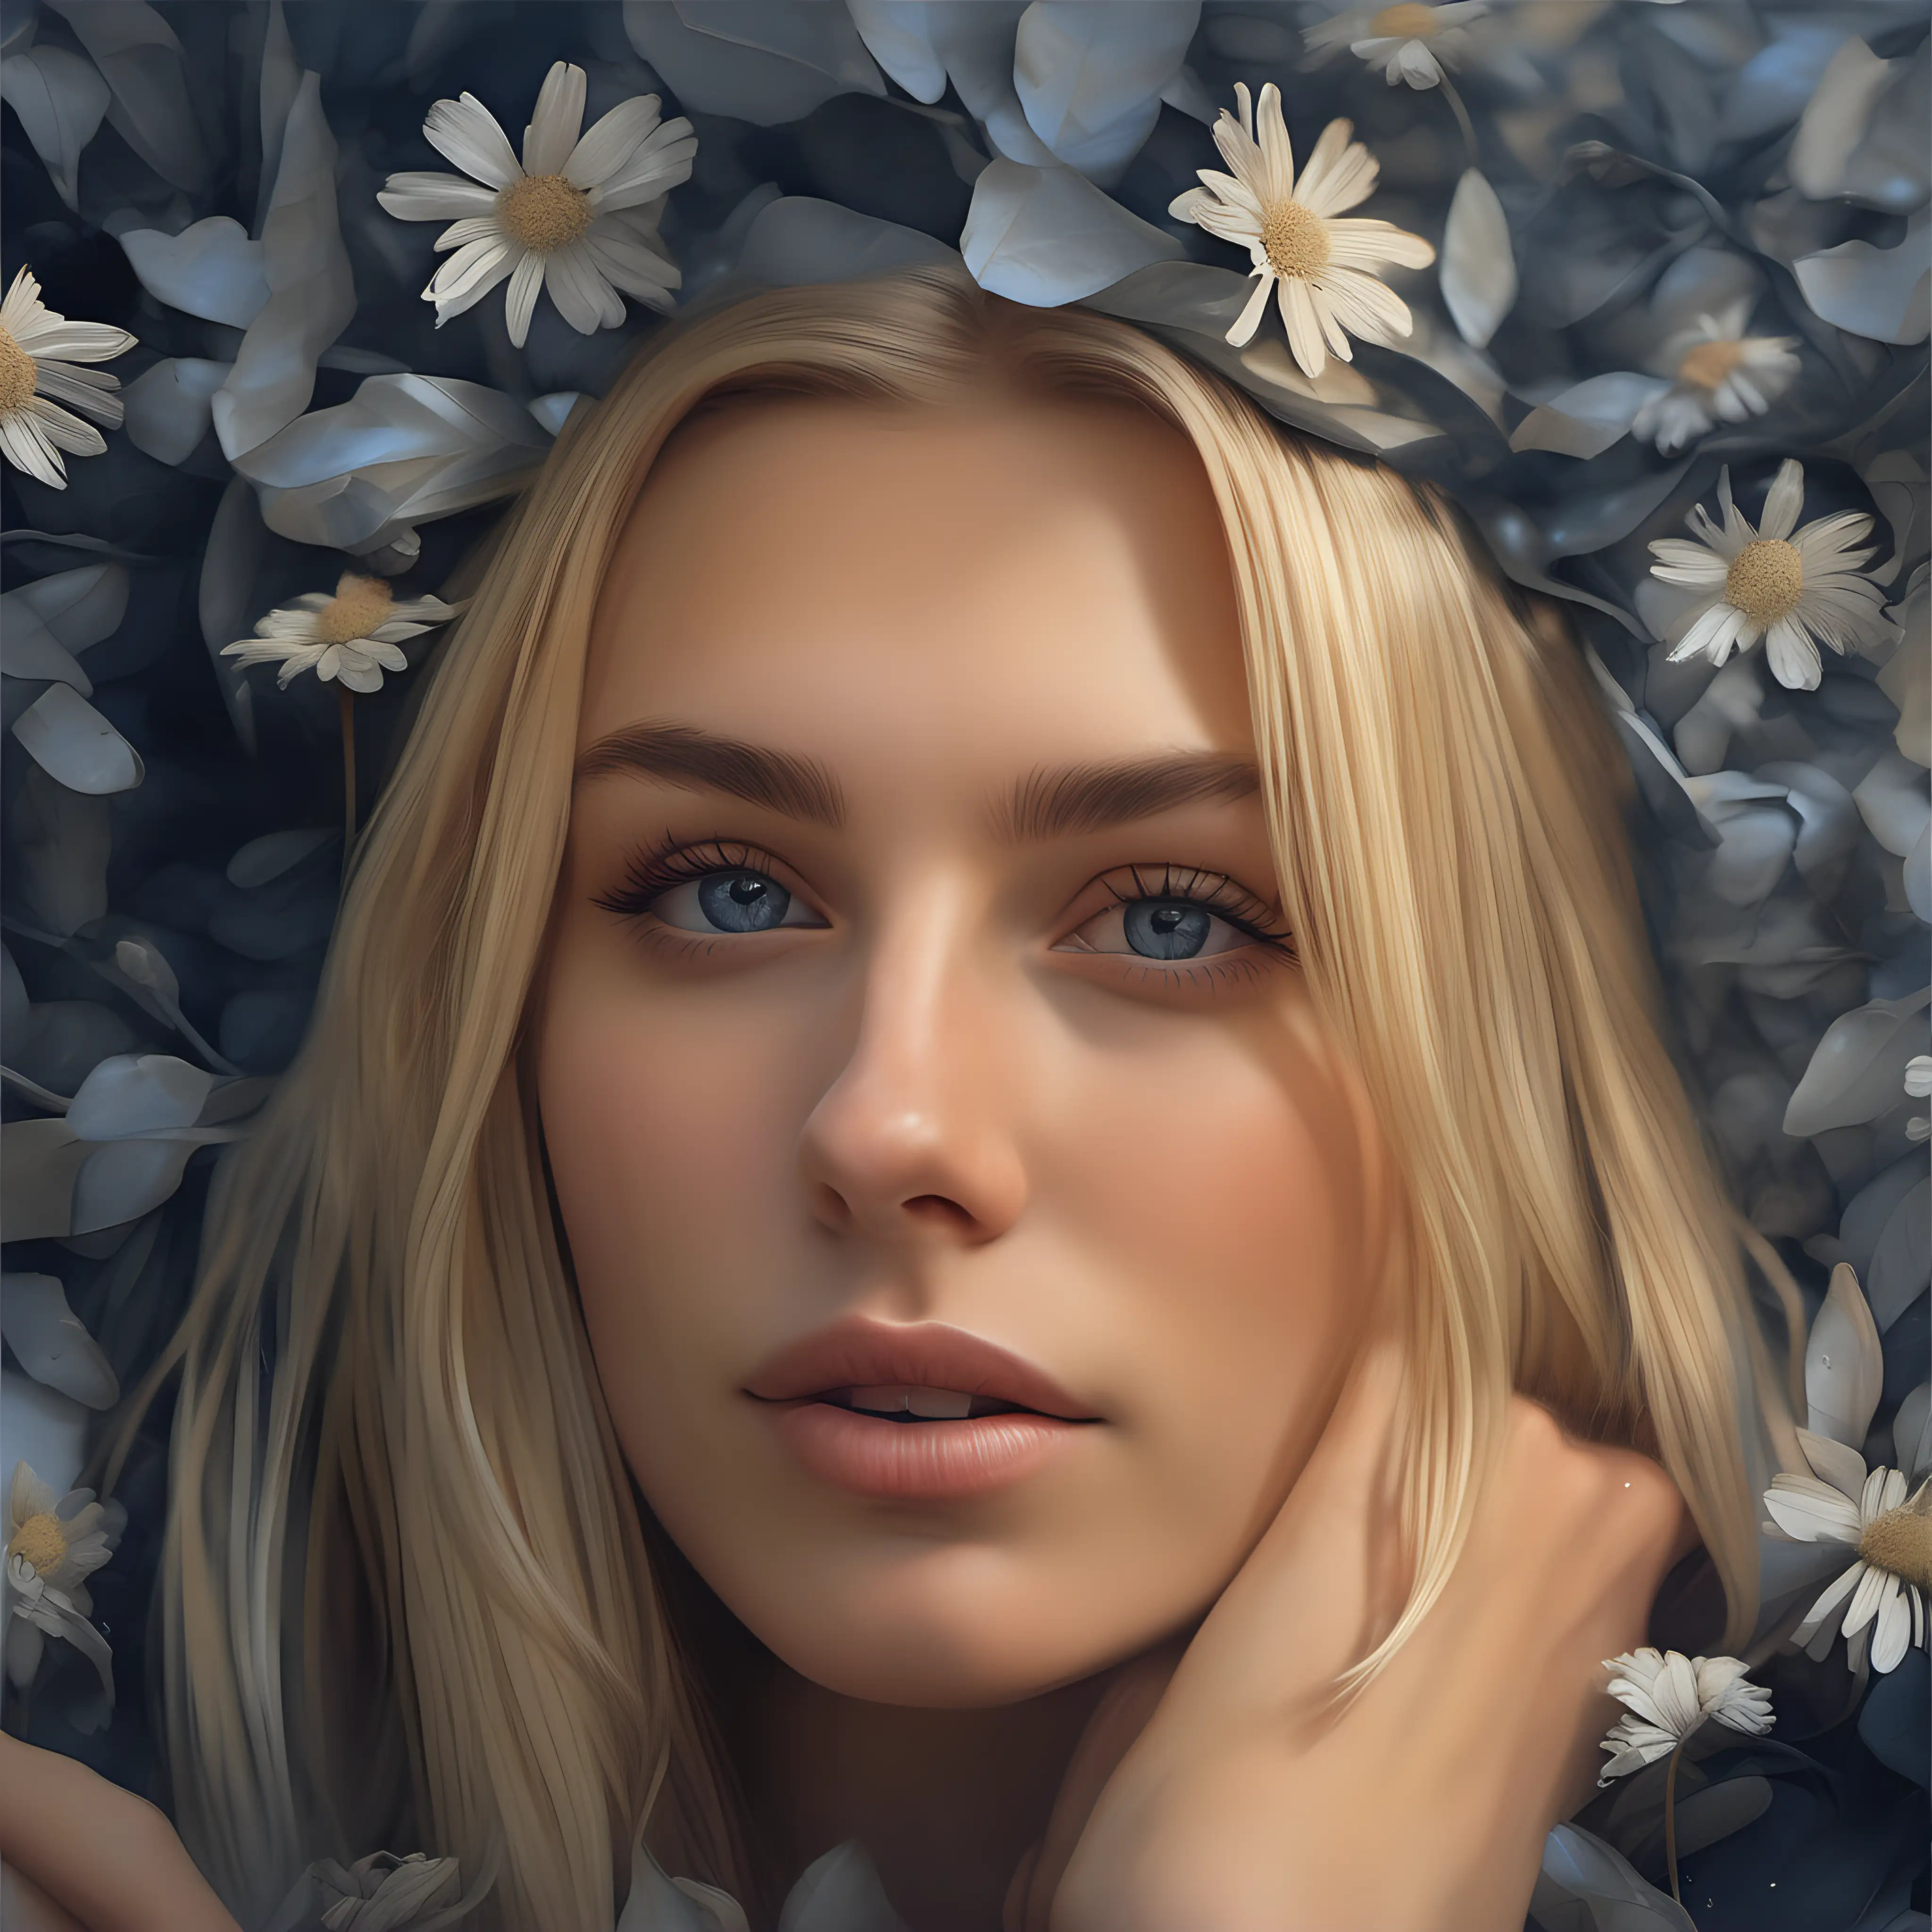 Captivating Photorealistic Portrait of a Beautiful Blonde Woman